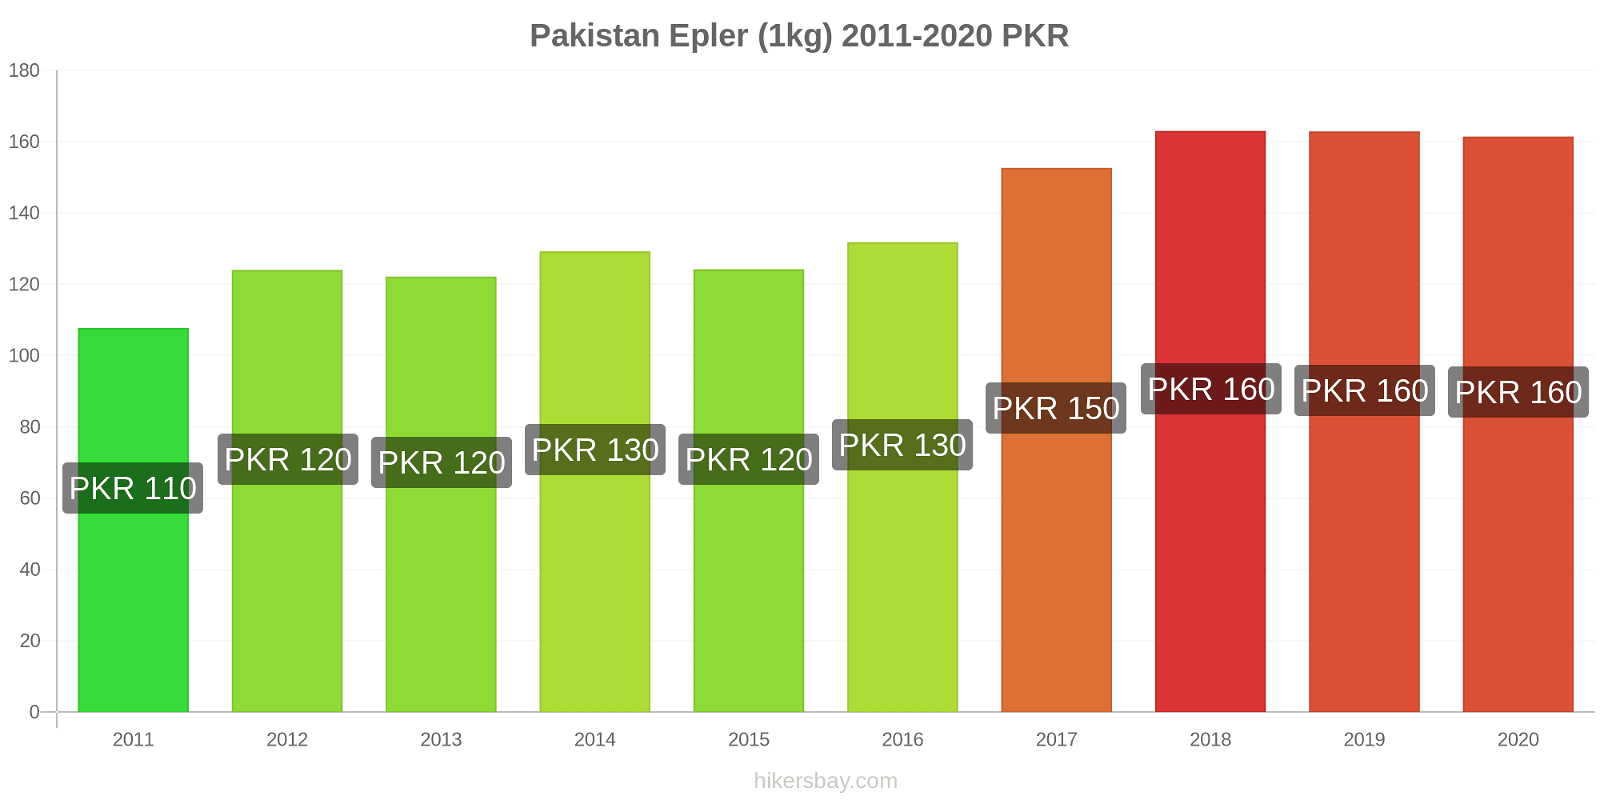 Pakistan prisendringer Epler (1kg) hikersbay.com